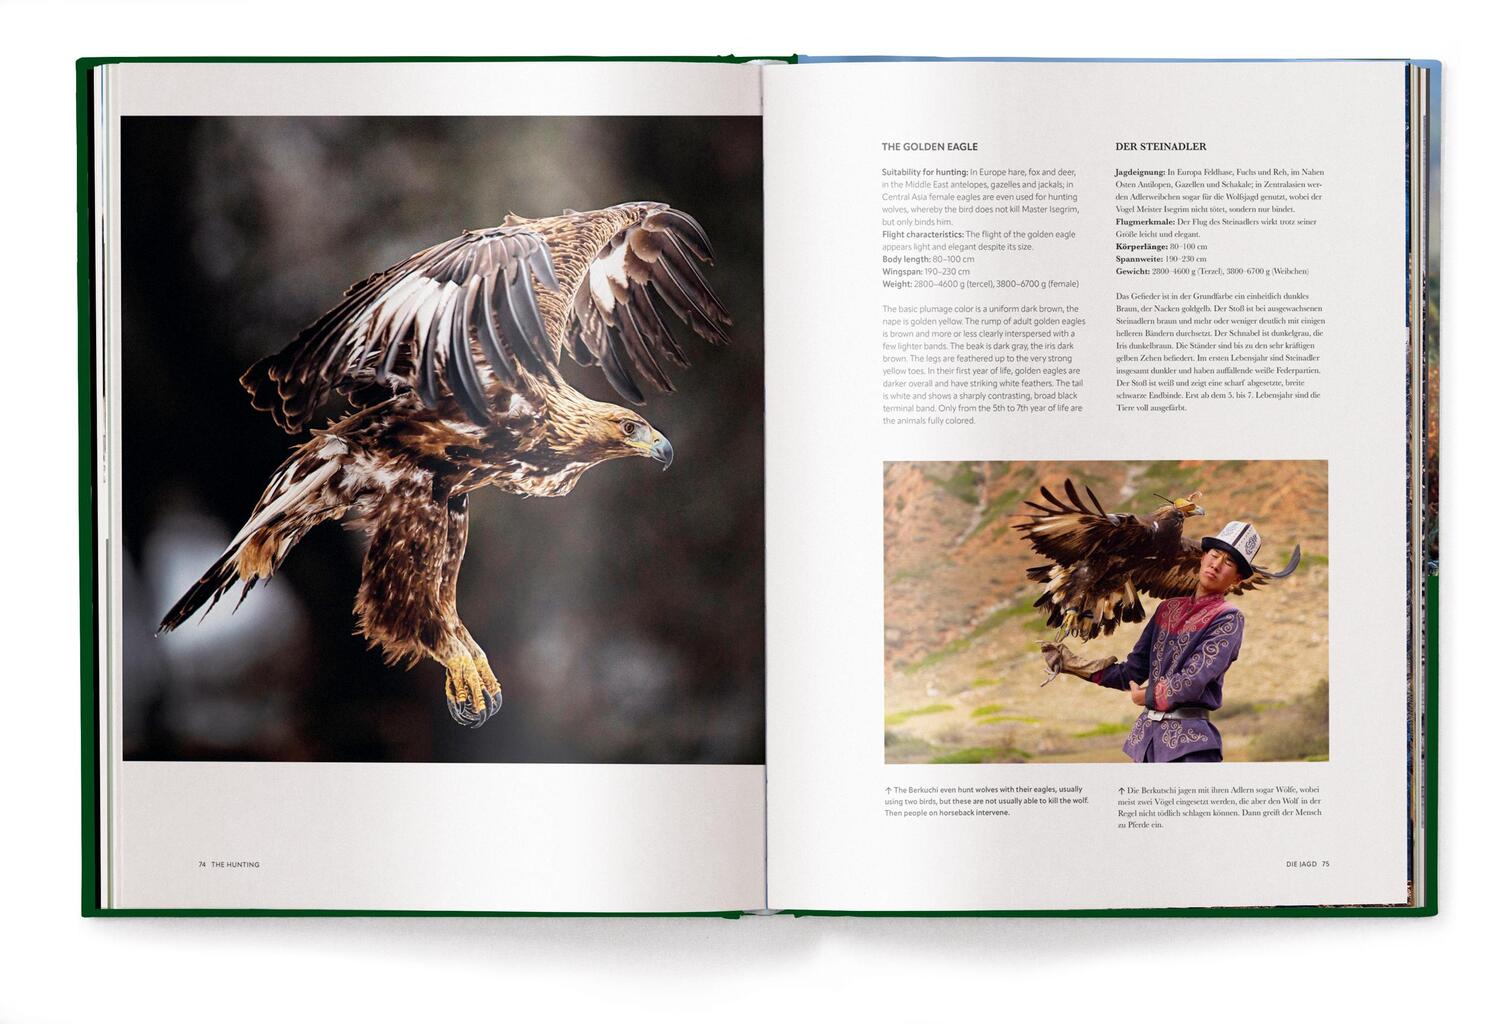 Bild: 9783961715442 | Hunting - The Ultimate Book | Peter Feierabend (u. a.) | Buch | 224 S.